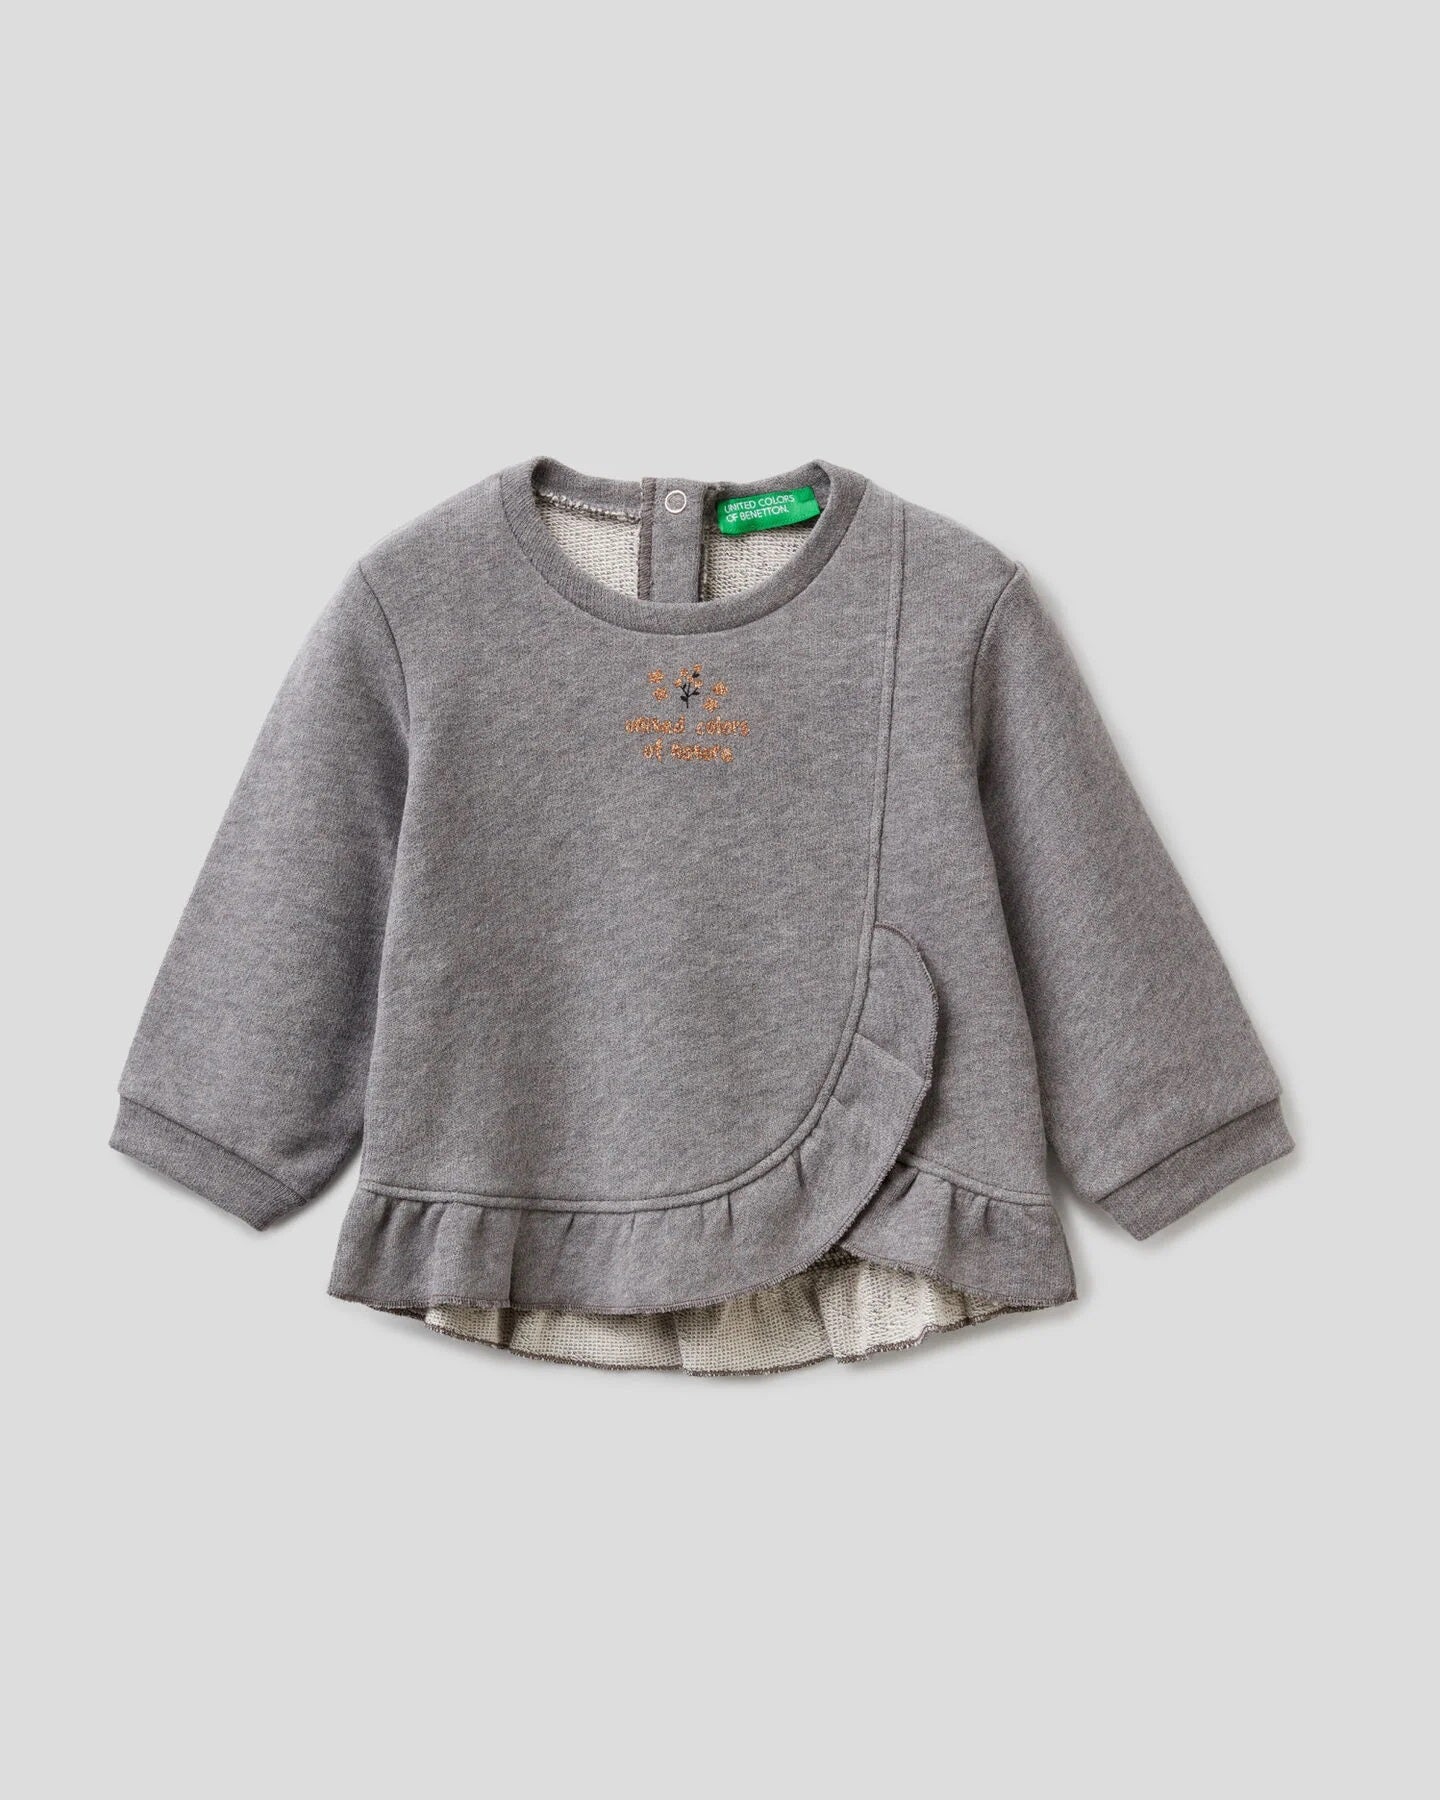 Dark Grey Sweater L/S